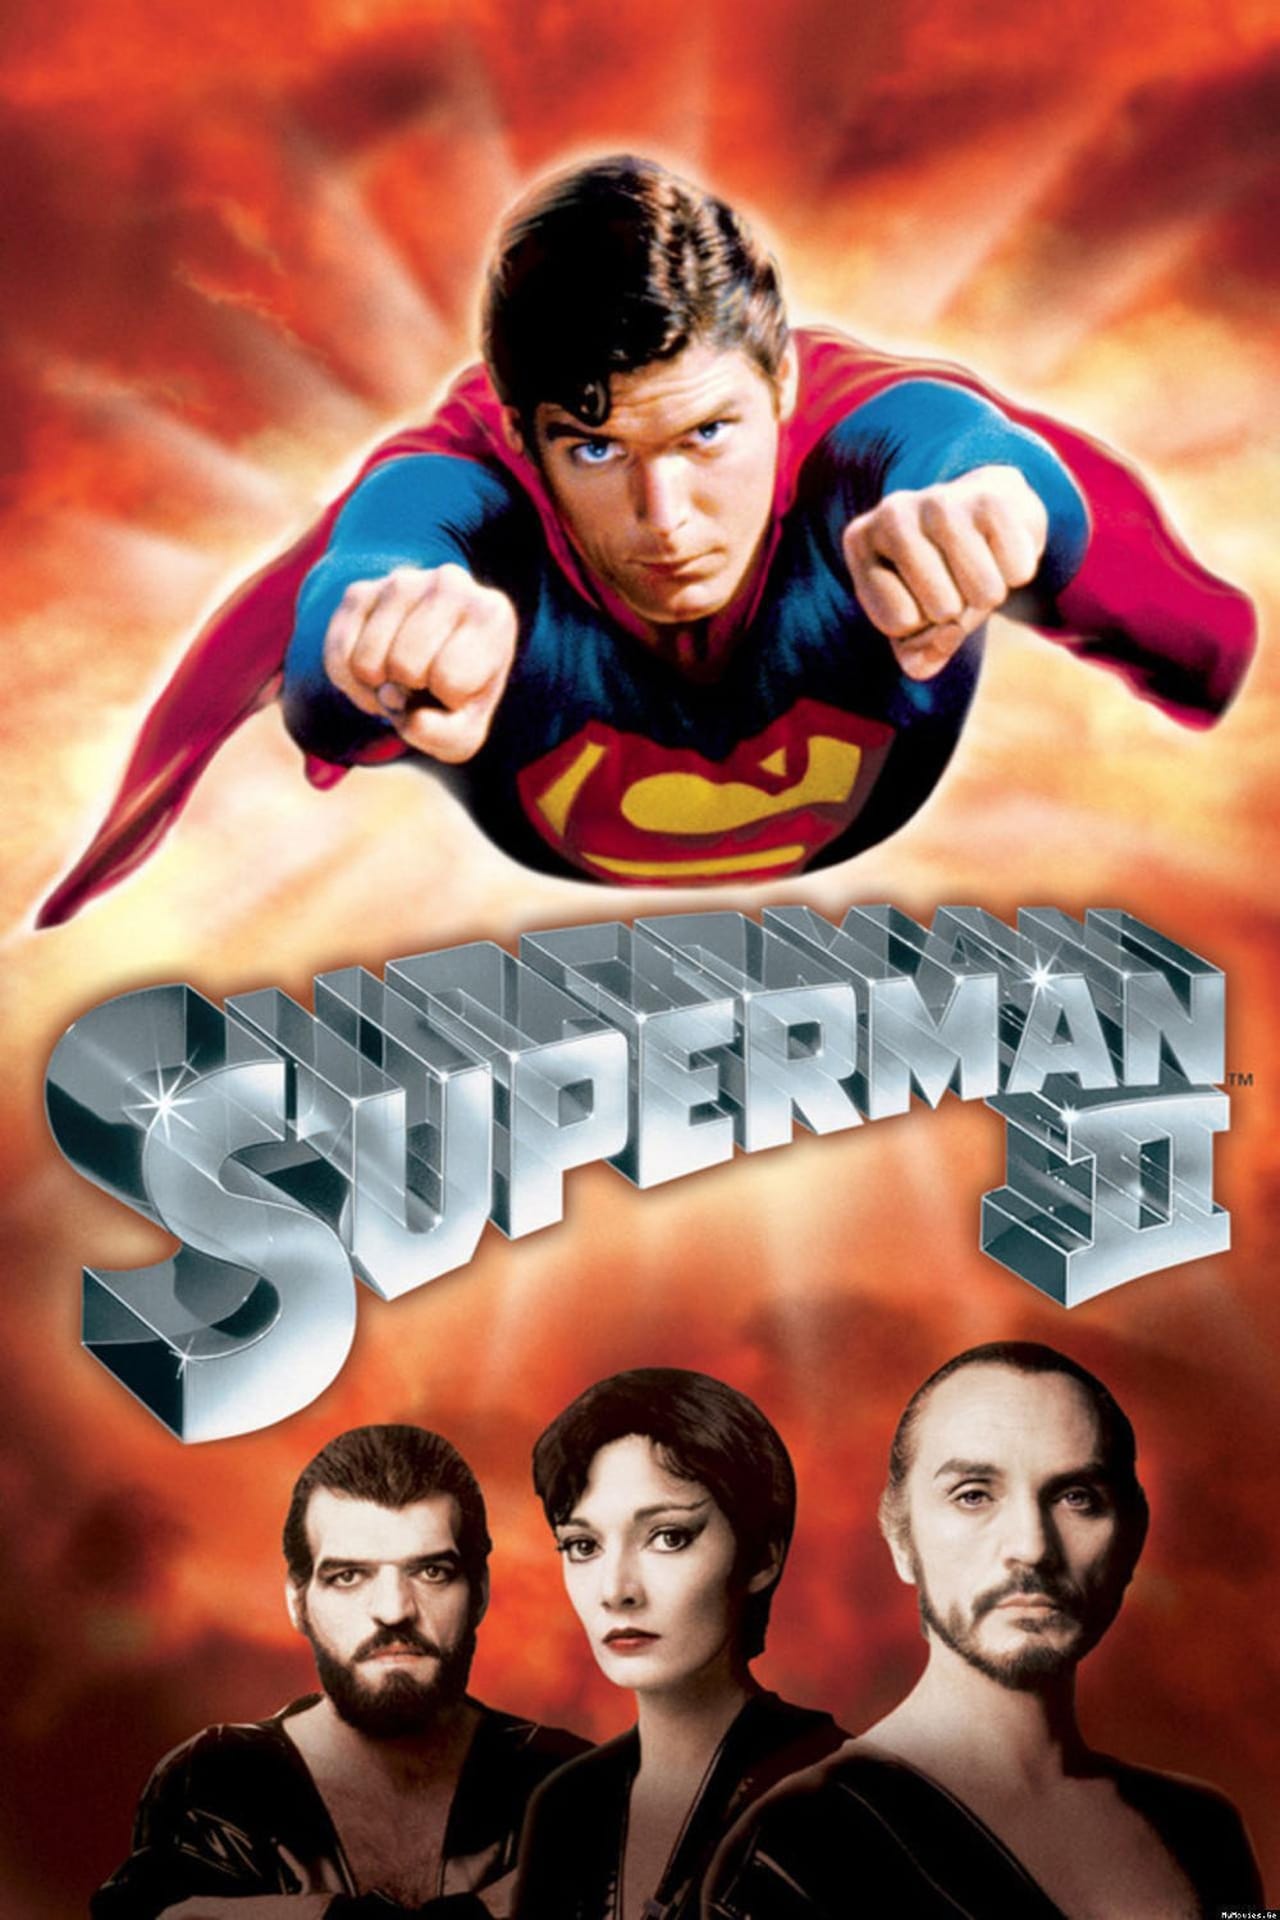 EN - Superman 2 (1980) - MARLON BRANDO COLLECTION